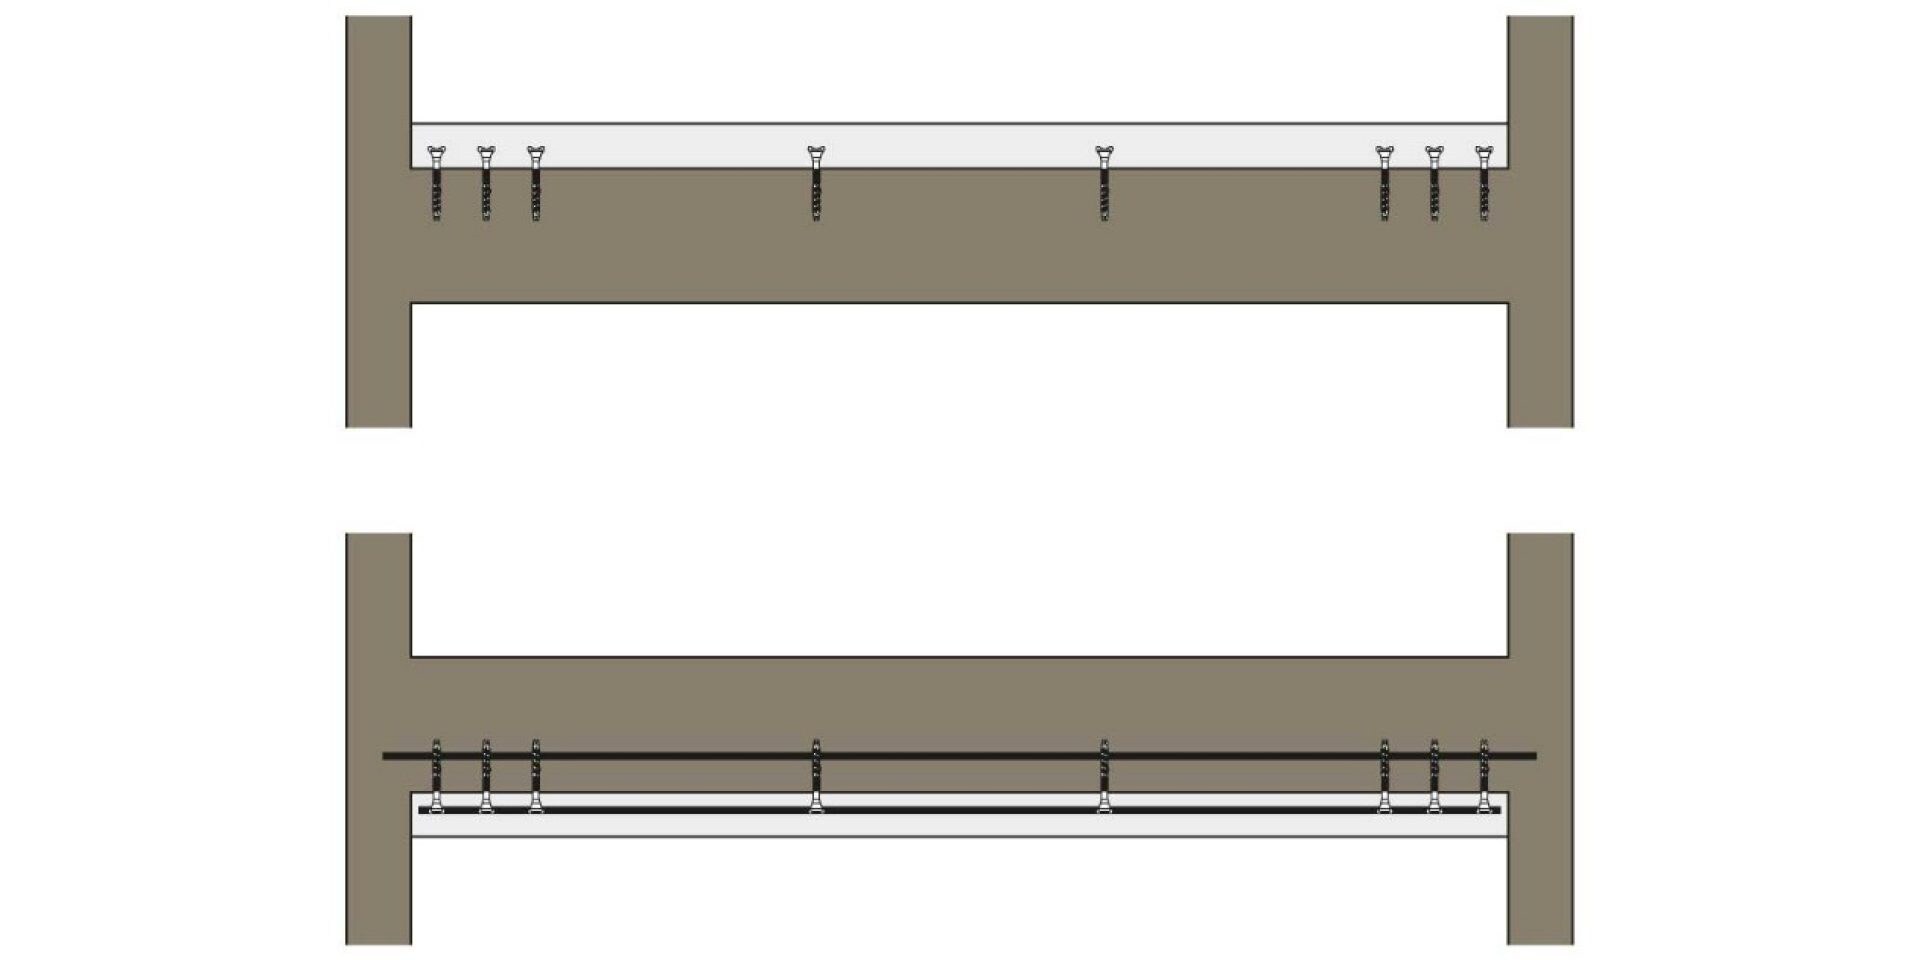 Post installed rebar concrete overlay Hilti design solution